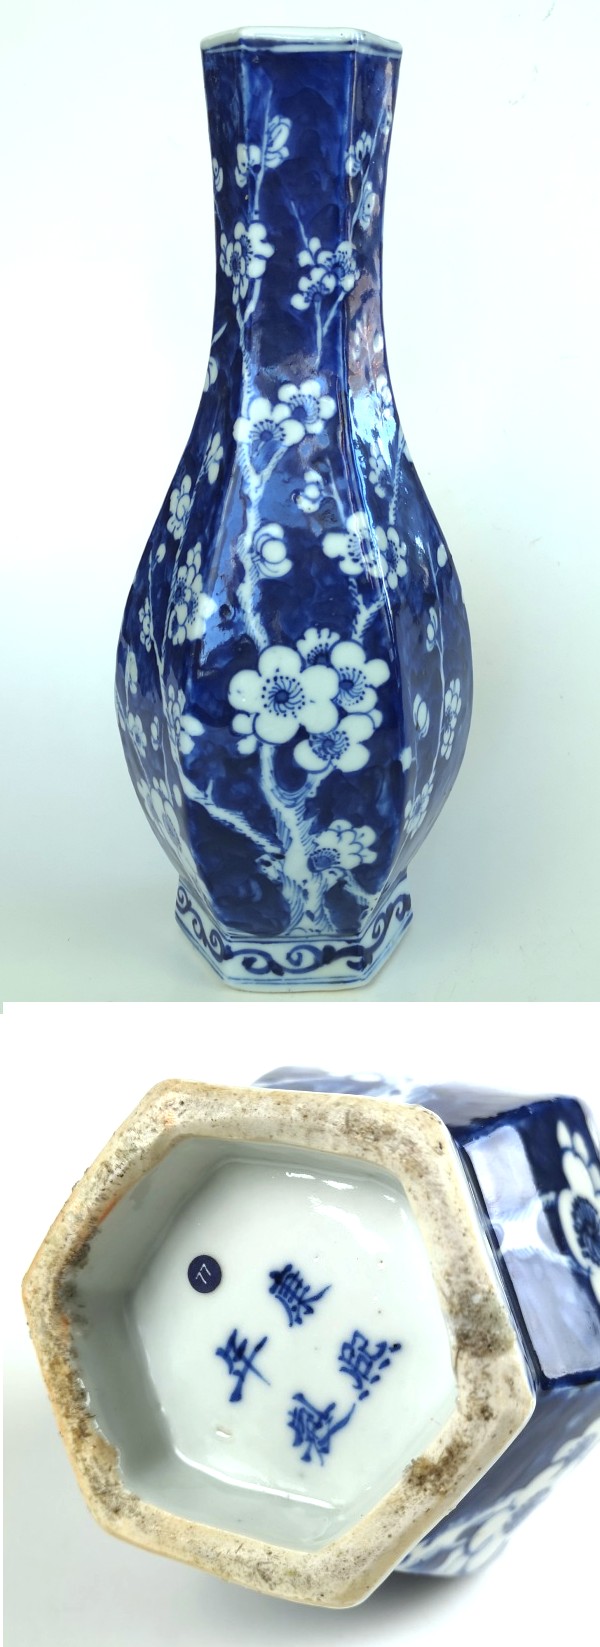 Kangxi revival vase